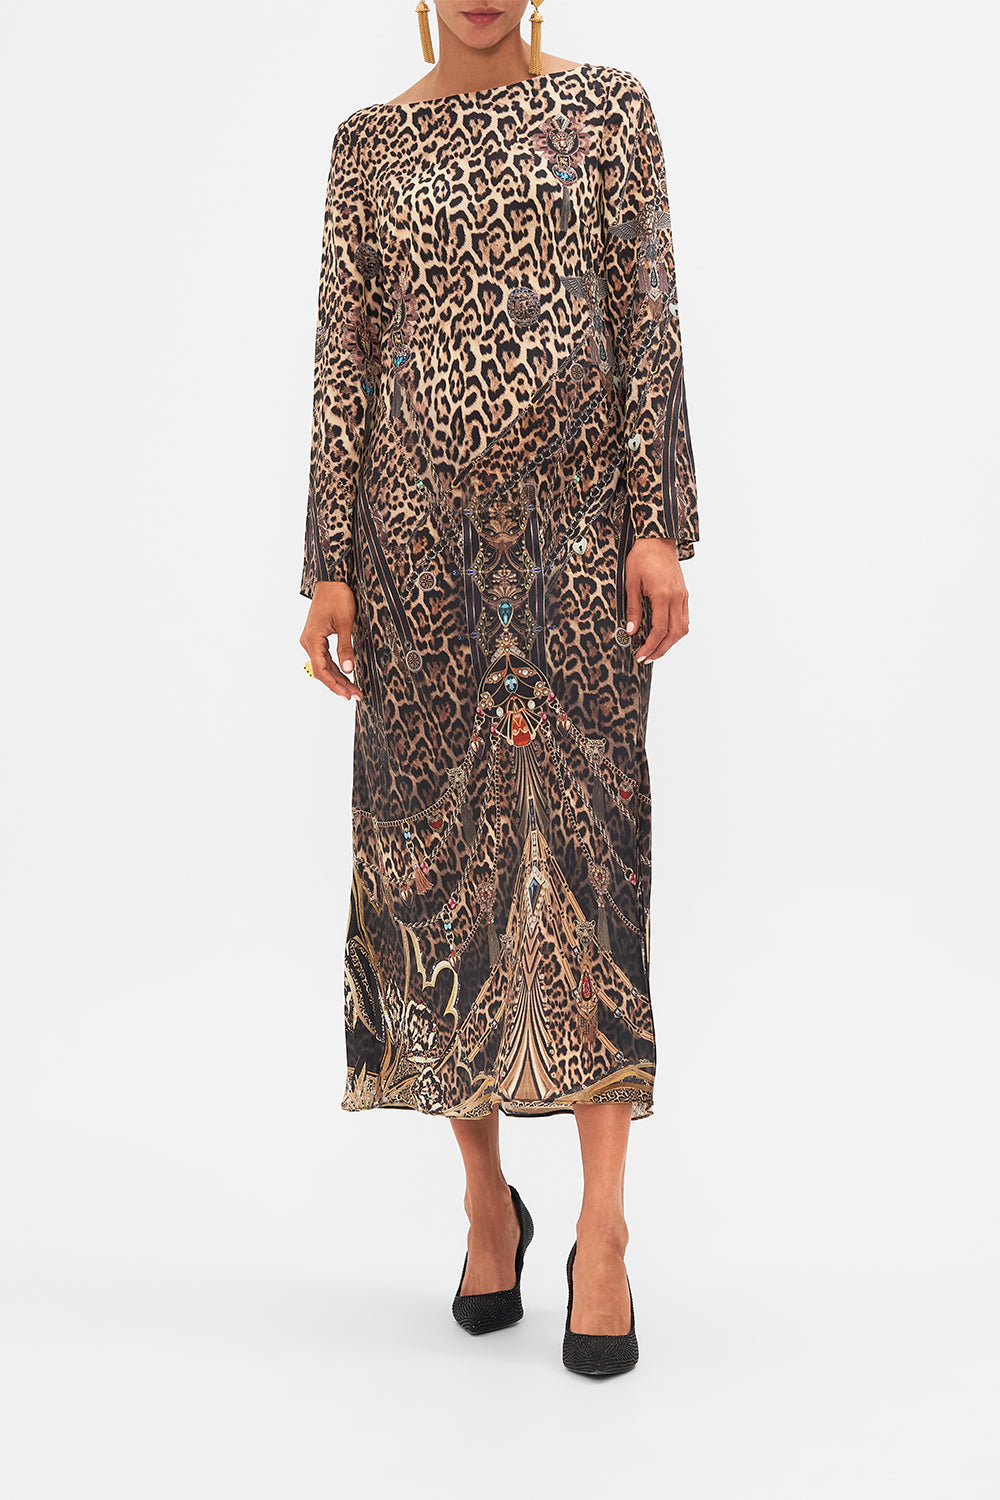 CAMILLA Leopard Long Sleeve Bias Dress in Amsterglam print